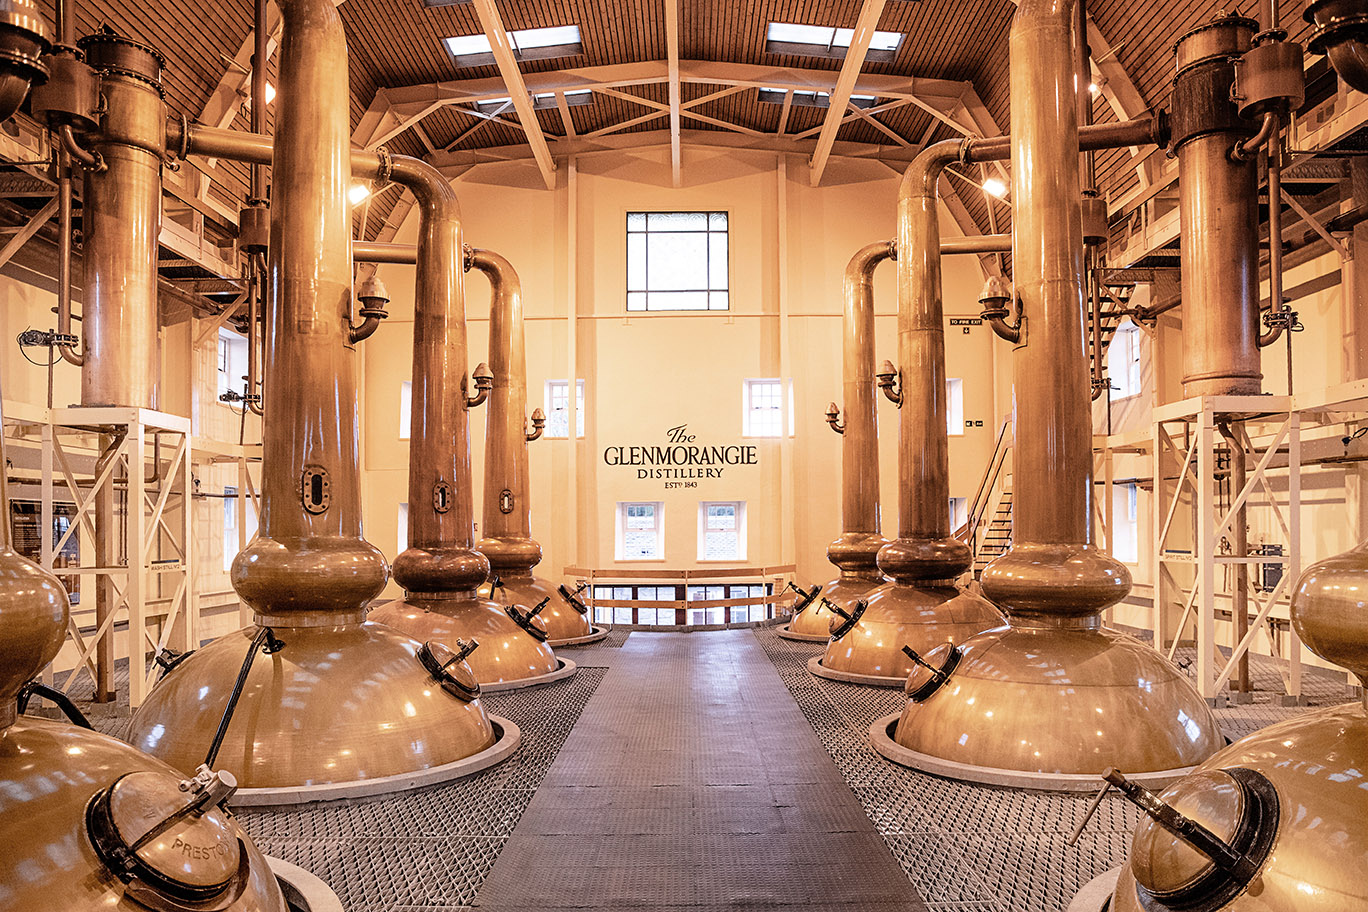 Glenmorangie-Destillerie: Im Kesselhaus wird Glenmorangie Single Malt Scotch Whisky destilliert